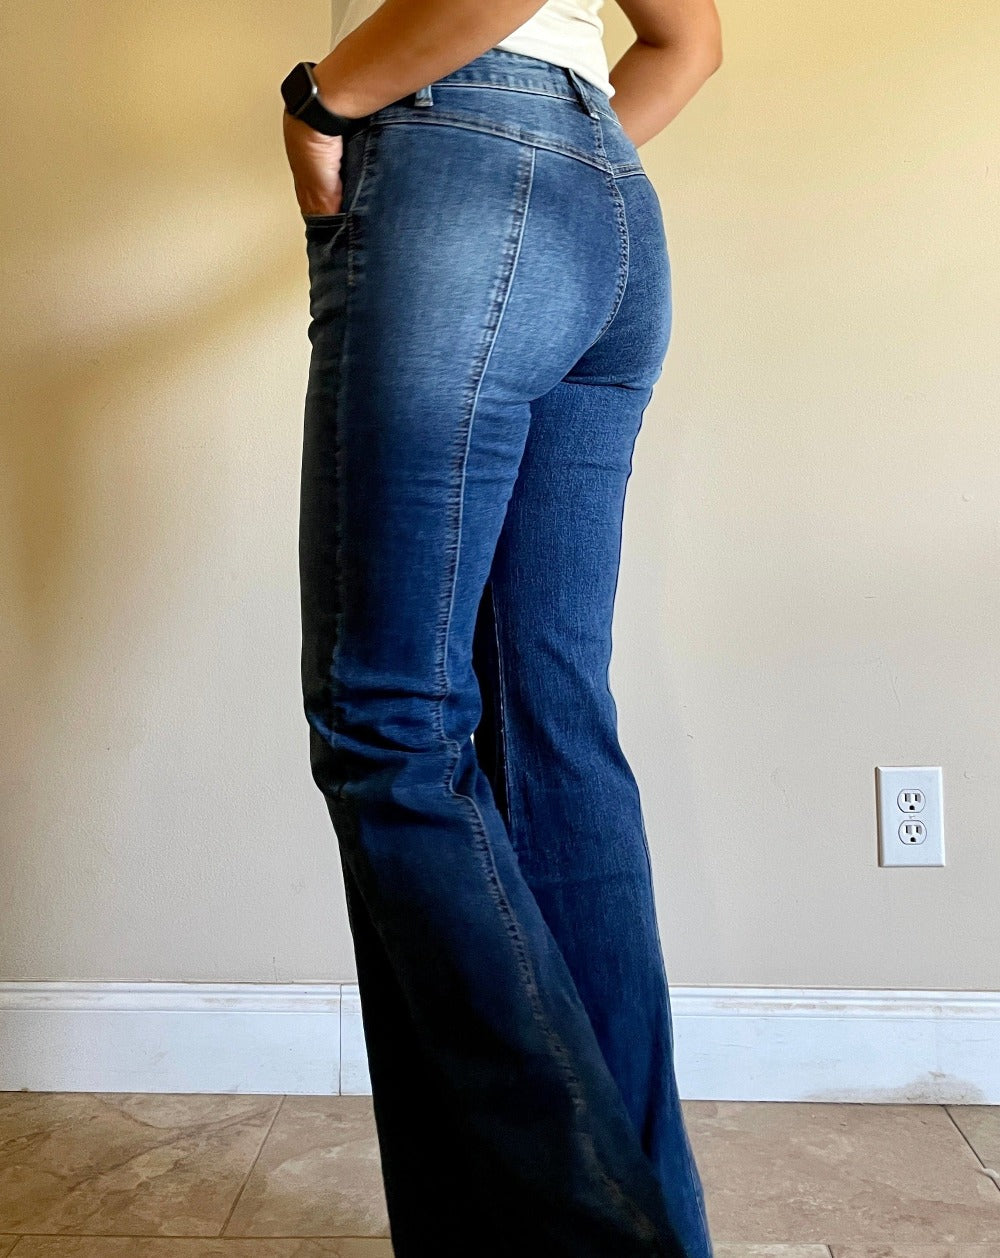 Ovando Jeans